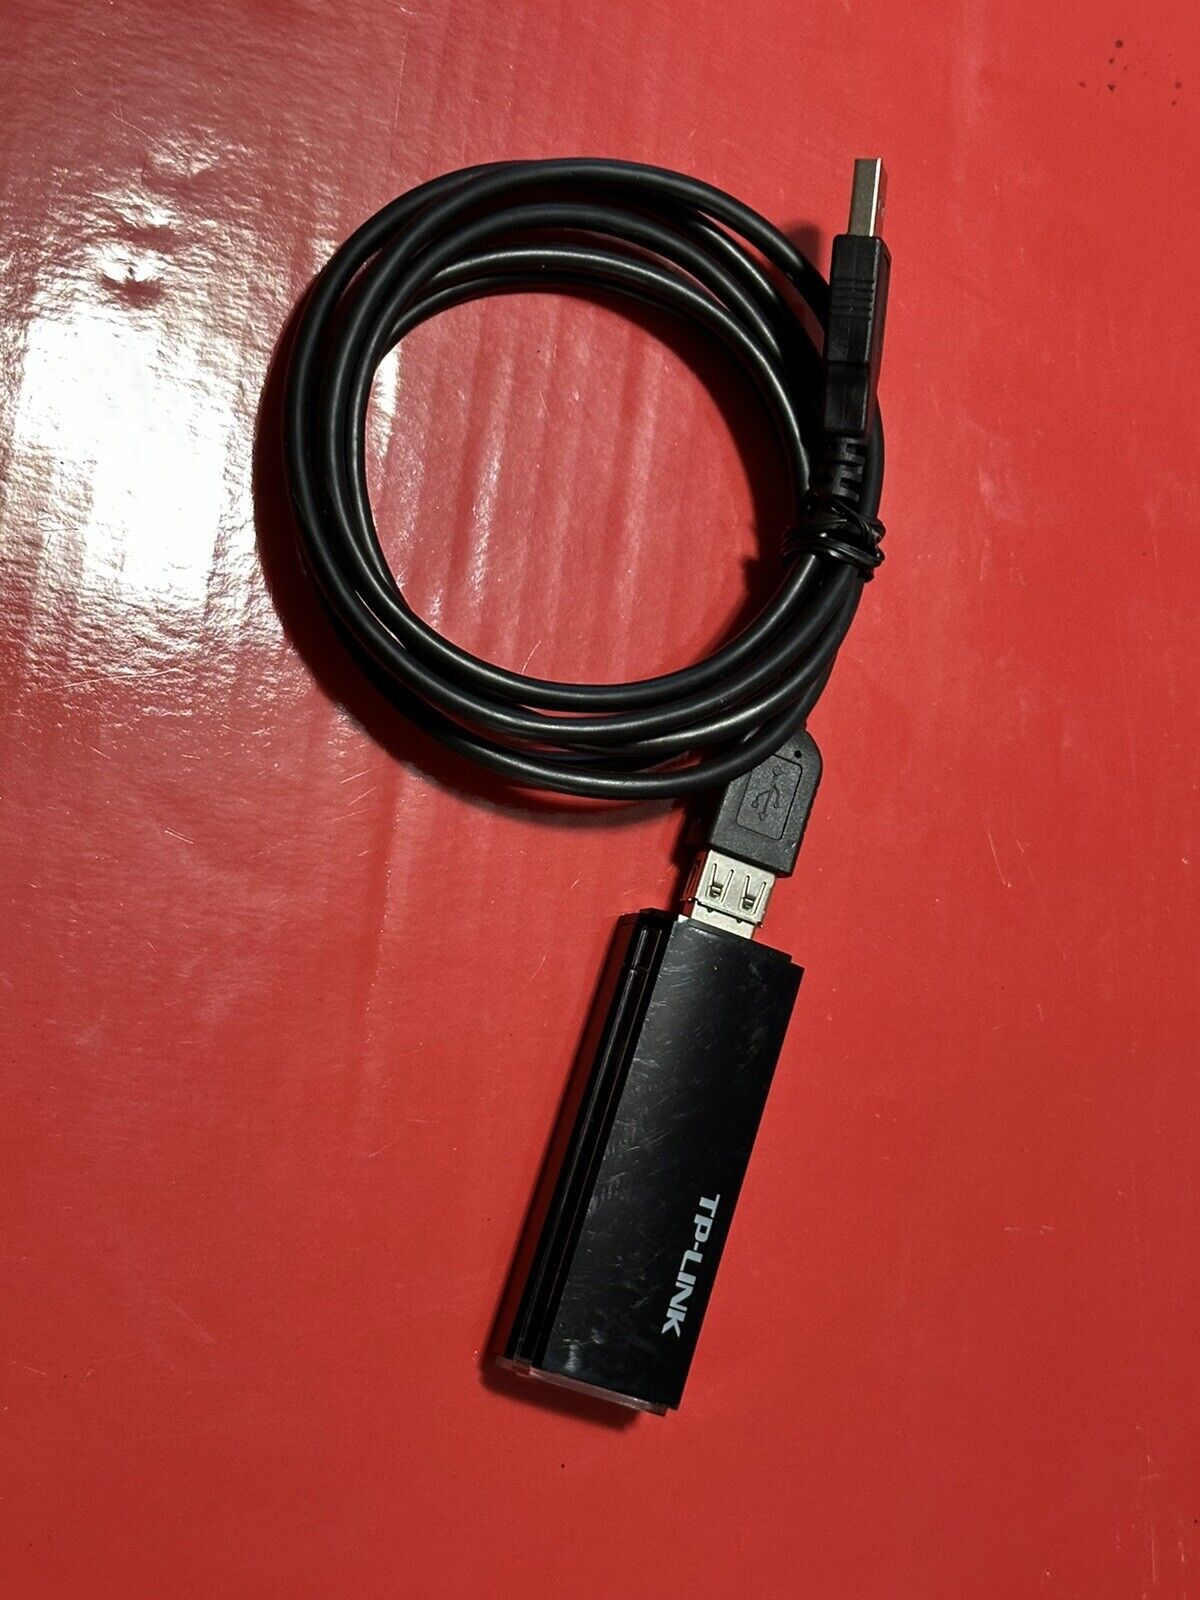 TP-Link TL-WDN4200 Wireless N900 Dual Band USB Adapter